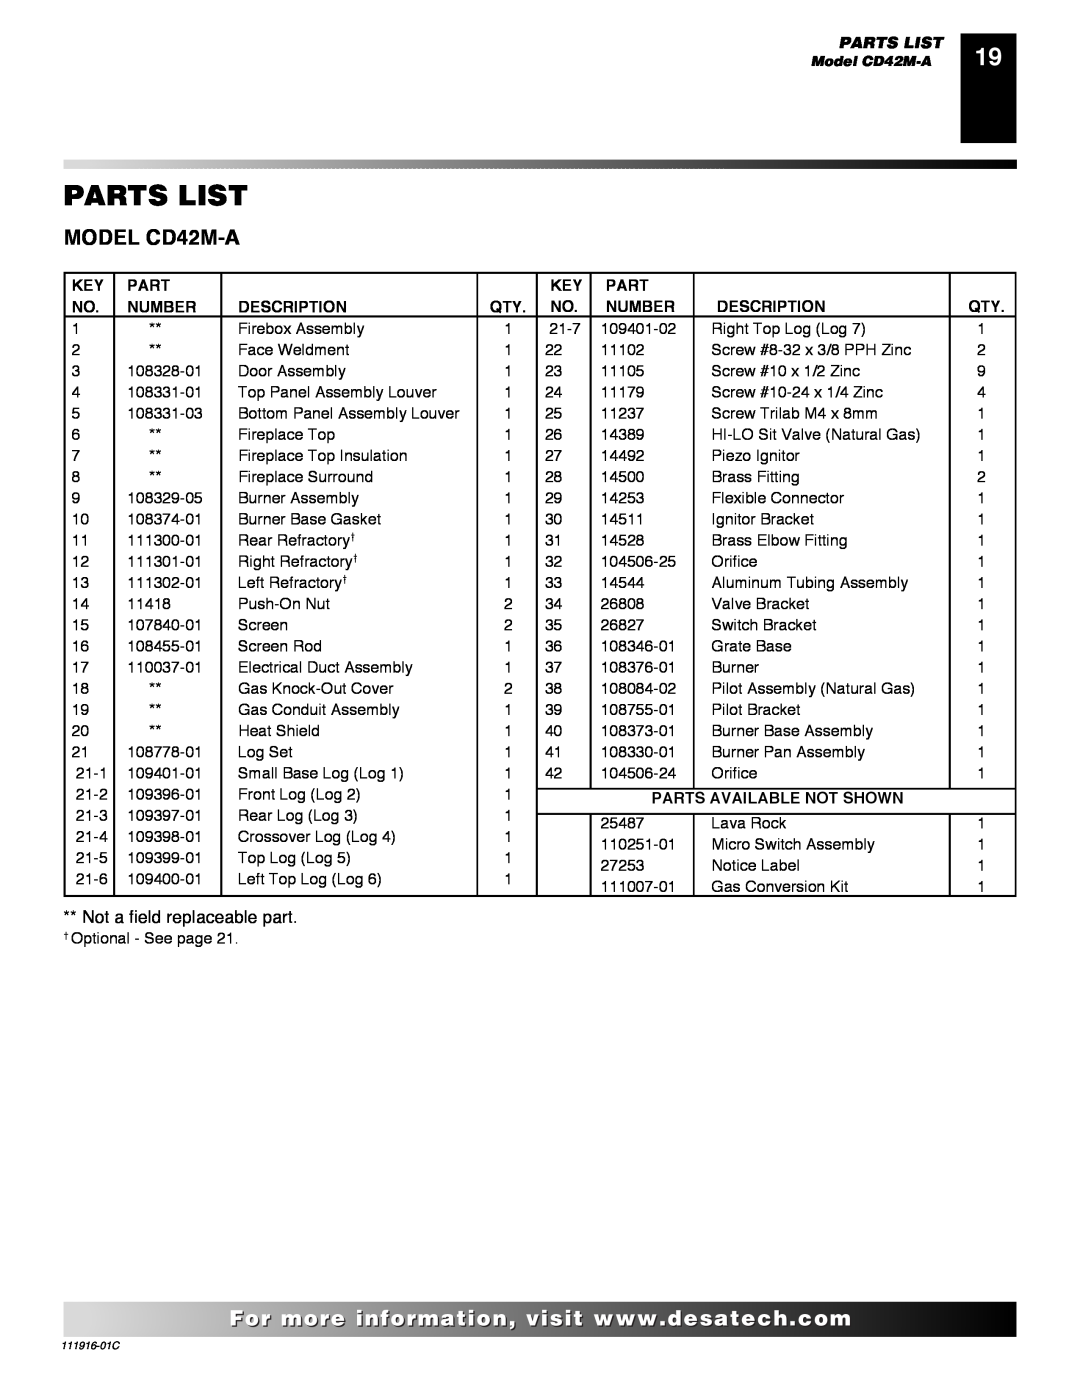 Desa CD32M (-1)(-2) installation manual Parts List, Number, Description, Available Not Shown 